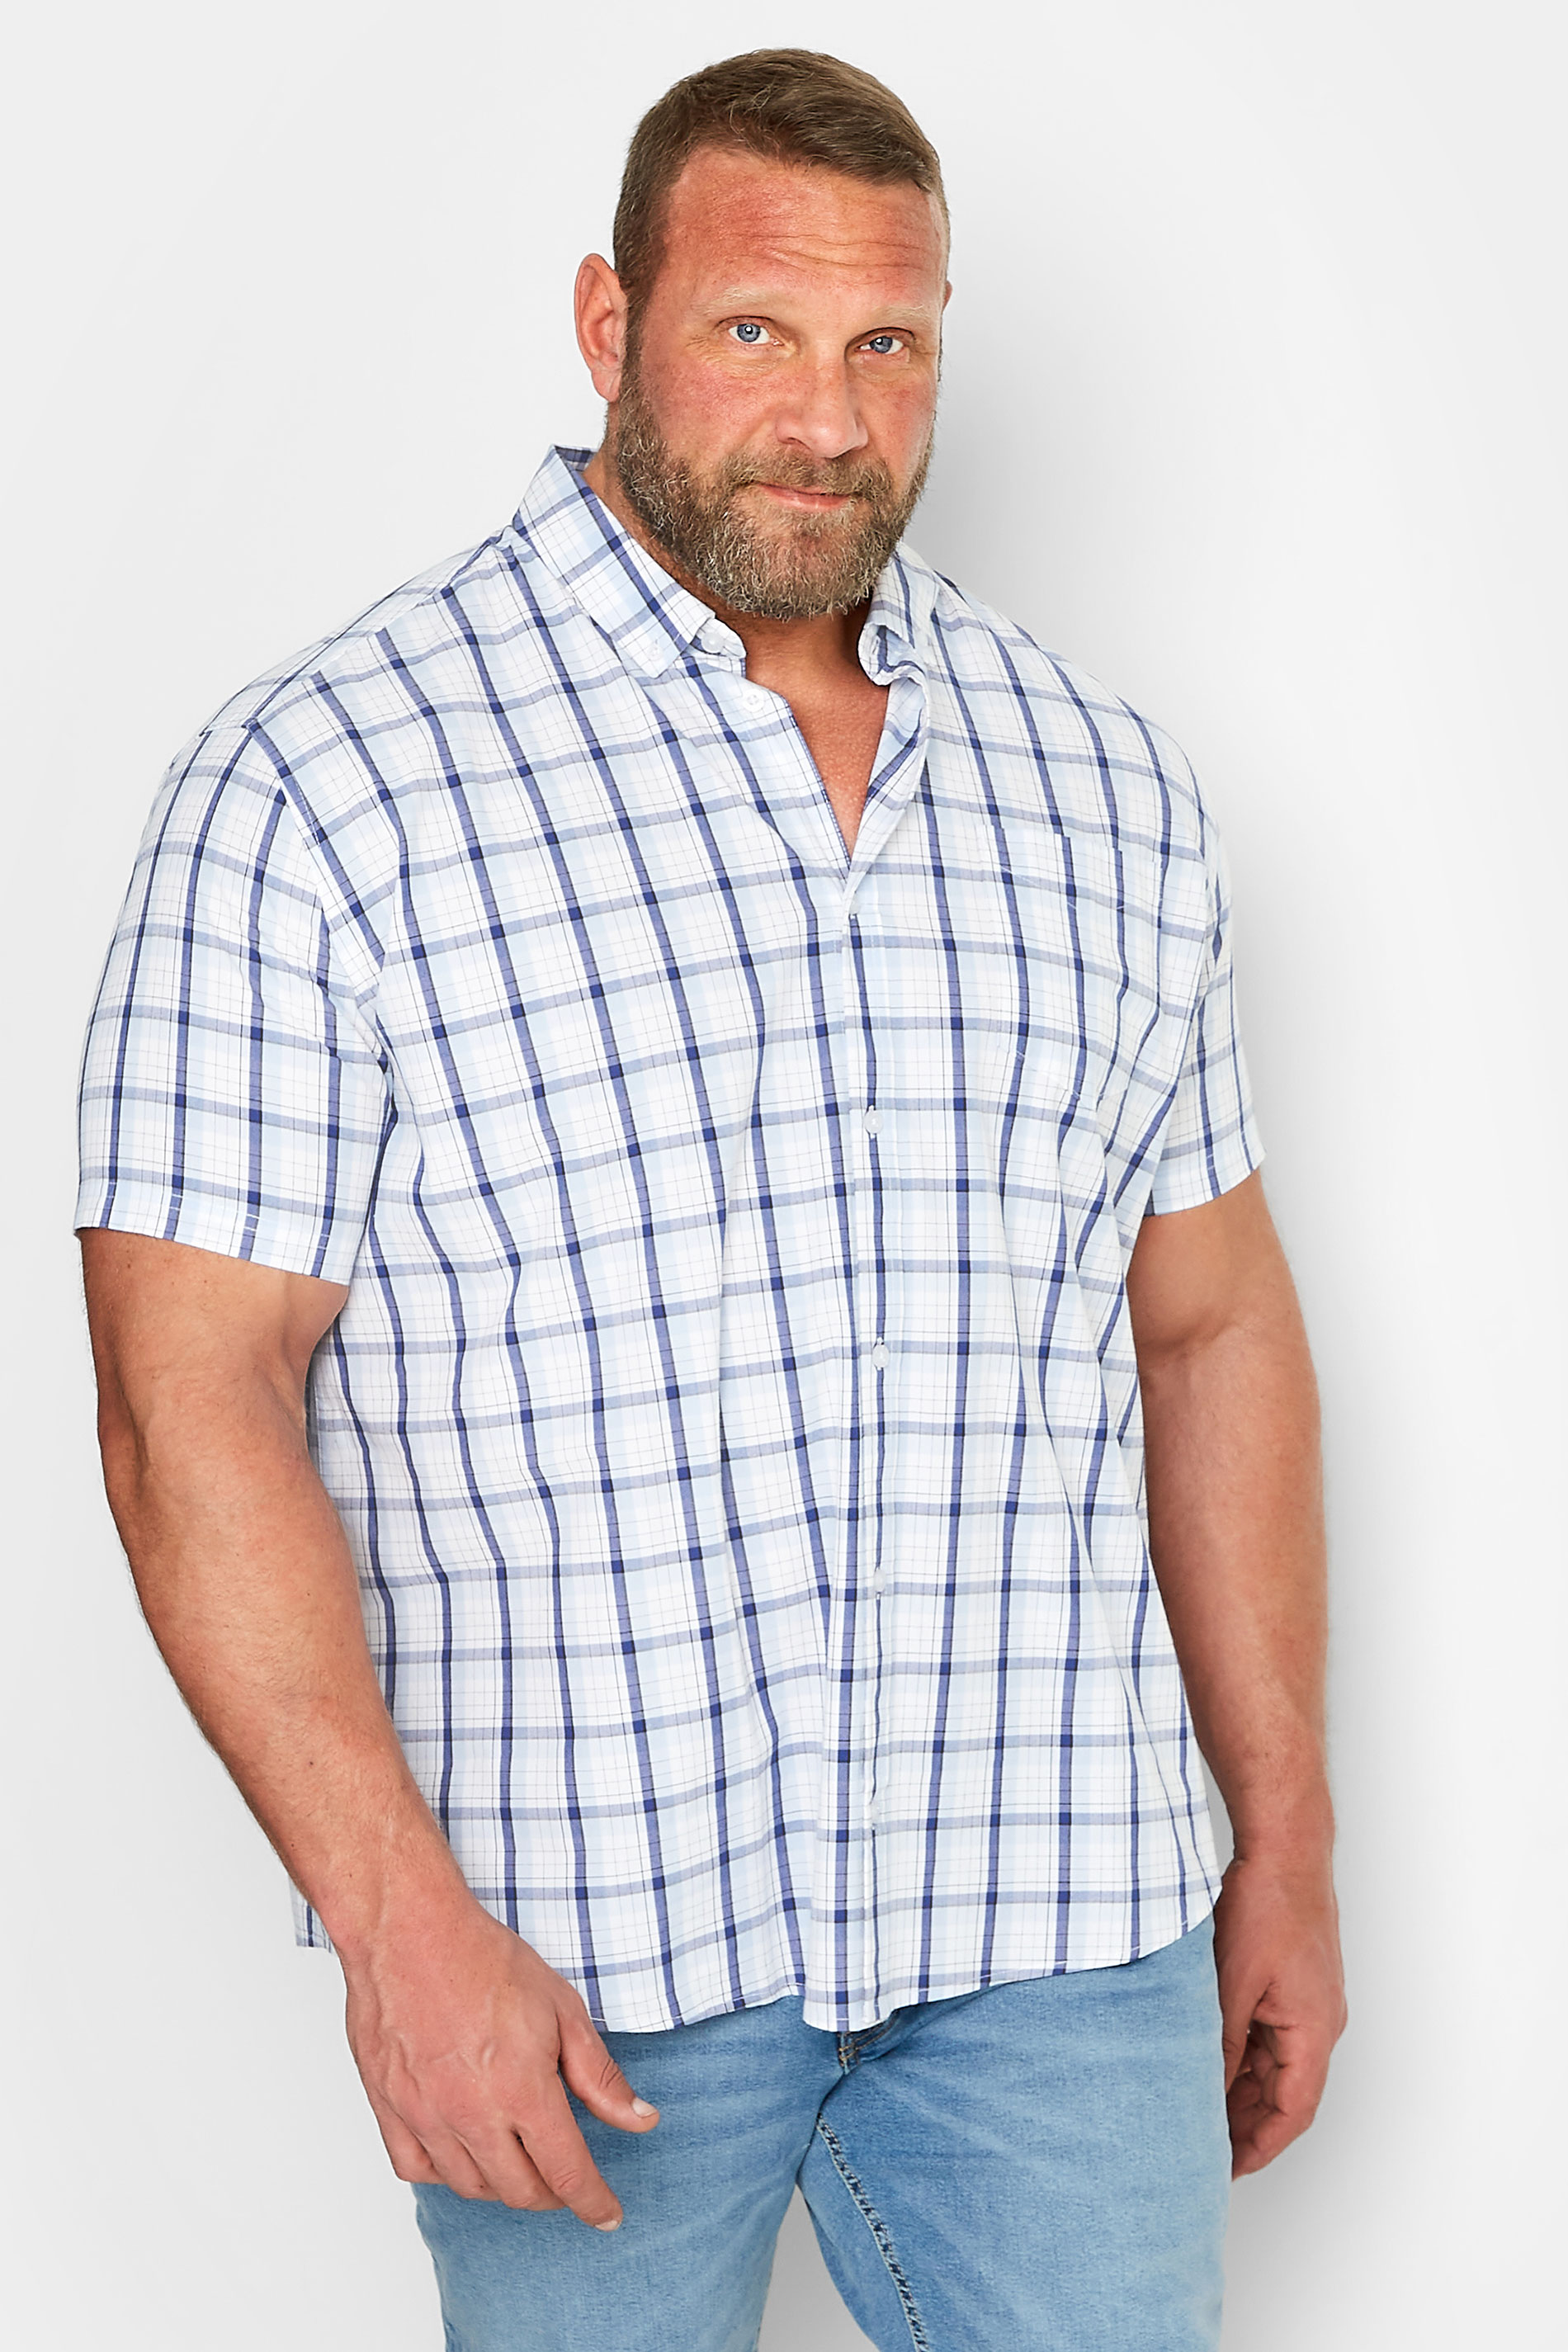 BadRhino Big & Tall Plus Size Mens White Check Short Sleeve Shirt | BadRhino  1